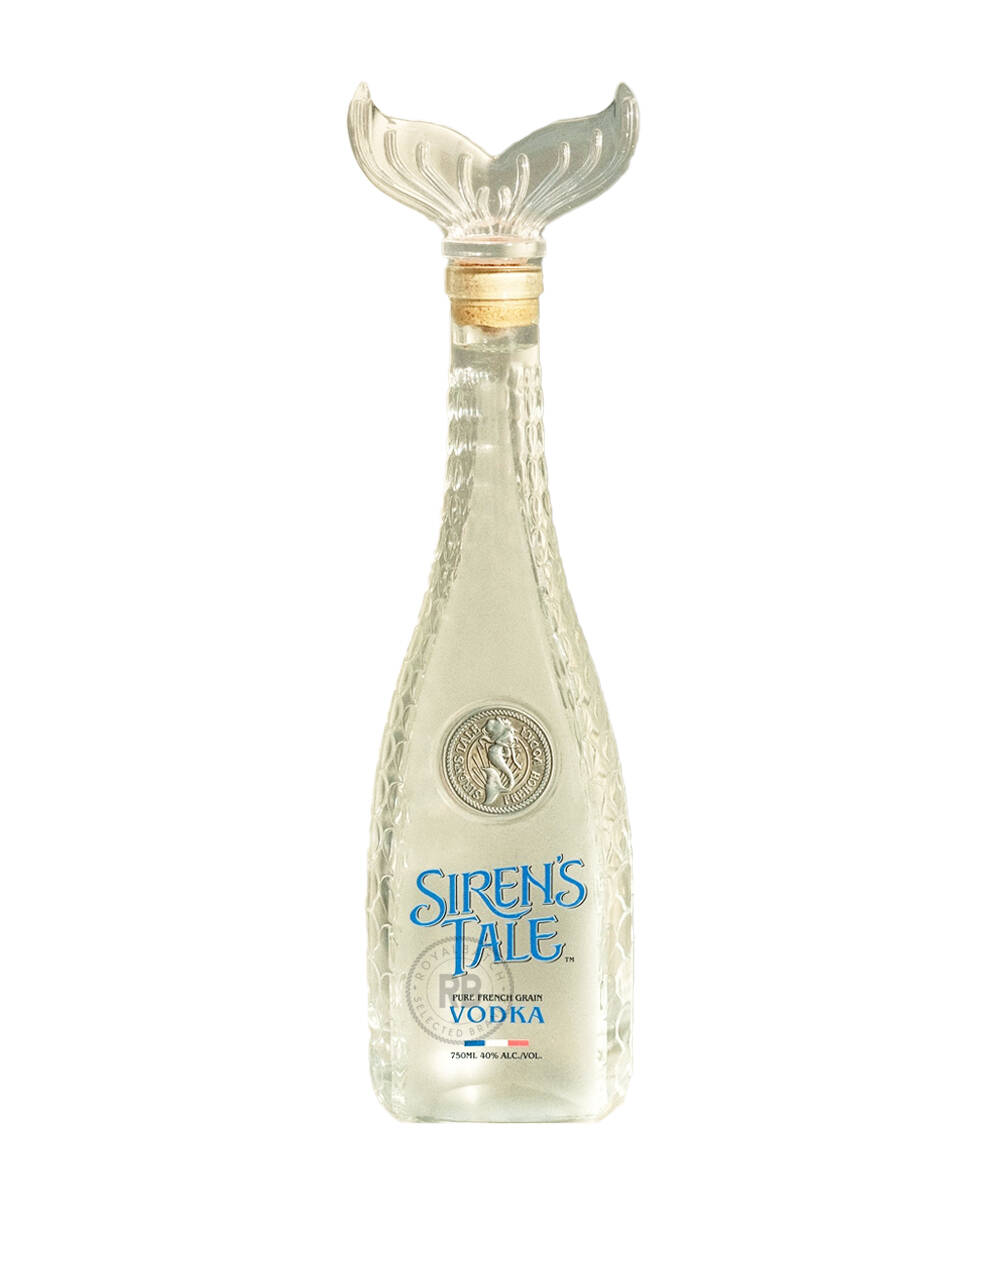 Siren's Tale Vodka Limited Edition Tail Bottle